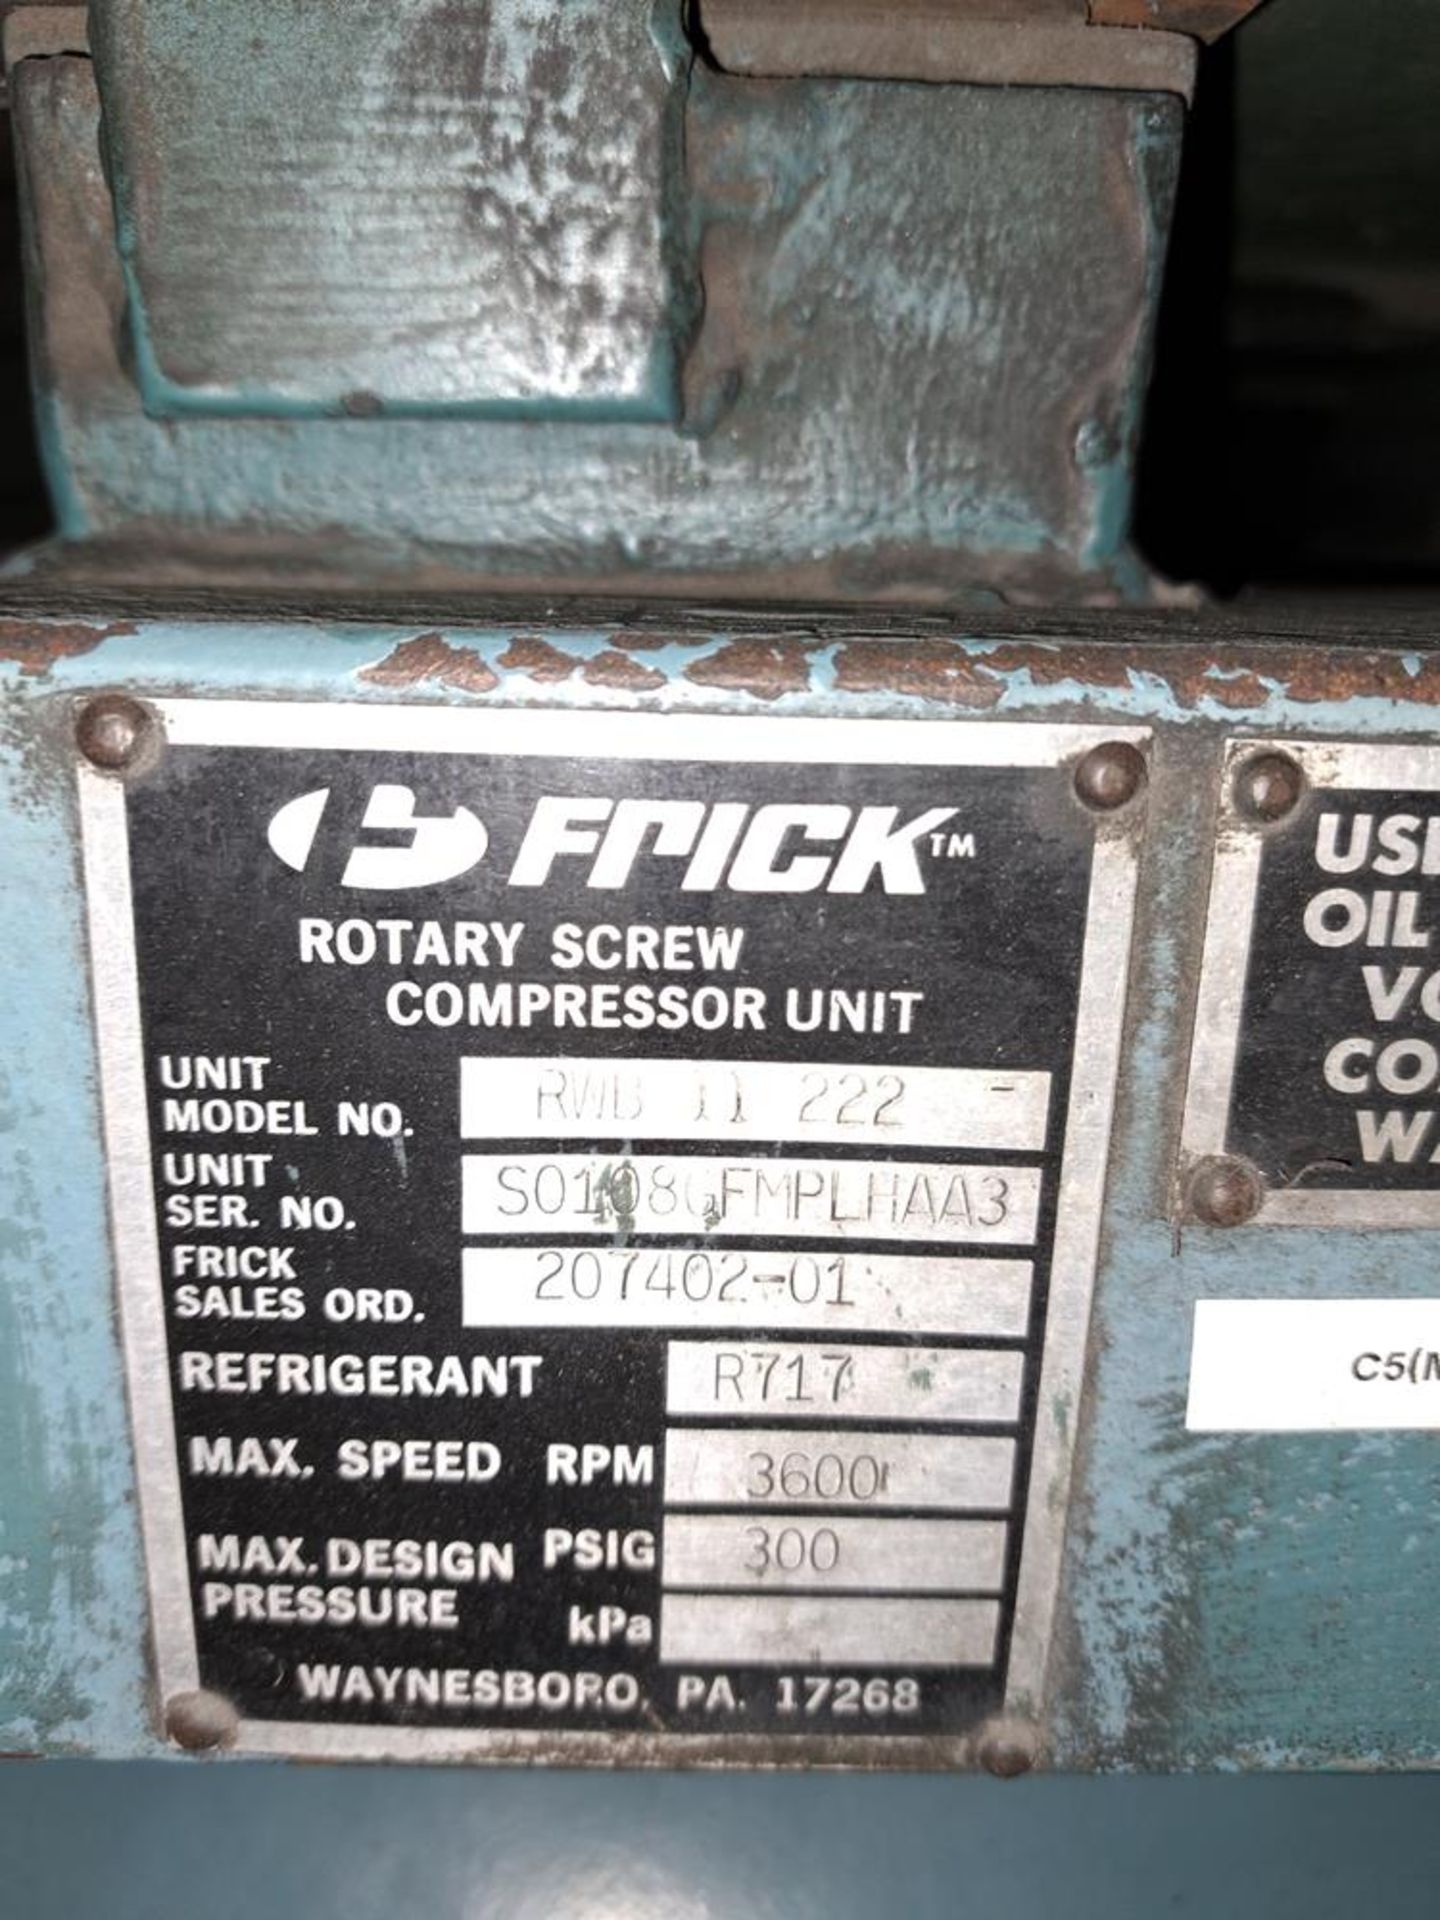 Frick Model RWBII+222, 500 H.P. Ammonia Rotary Screw Compressor, S/N S0108GFMPLHAA3 Motor needs to - Image 8 of 11